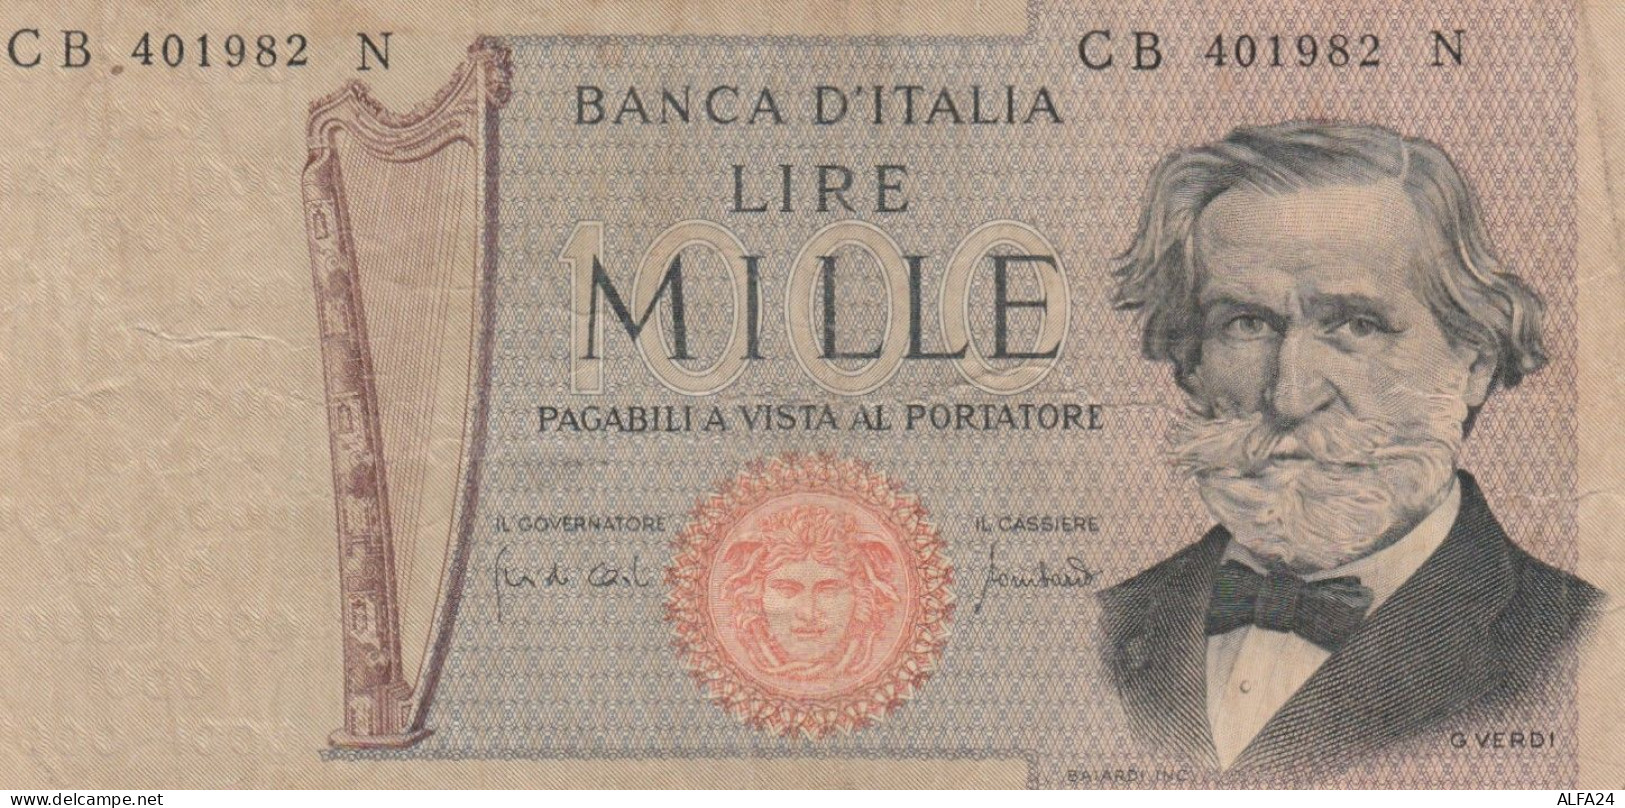 BANCONOTA ITALIA 1000 VERDI VF (RY2677 - 1000 Lire